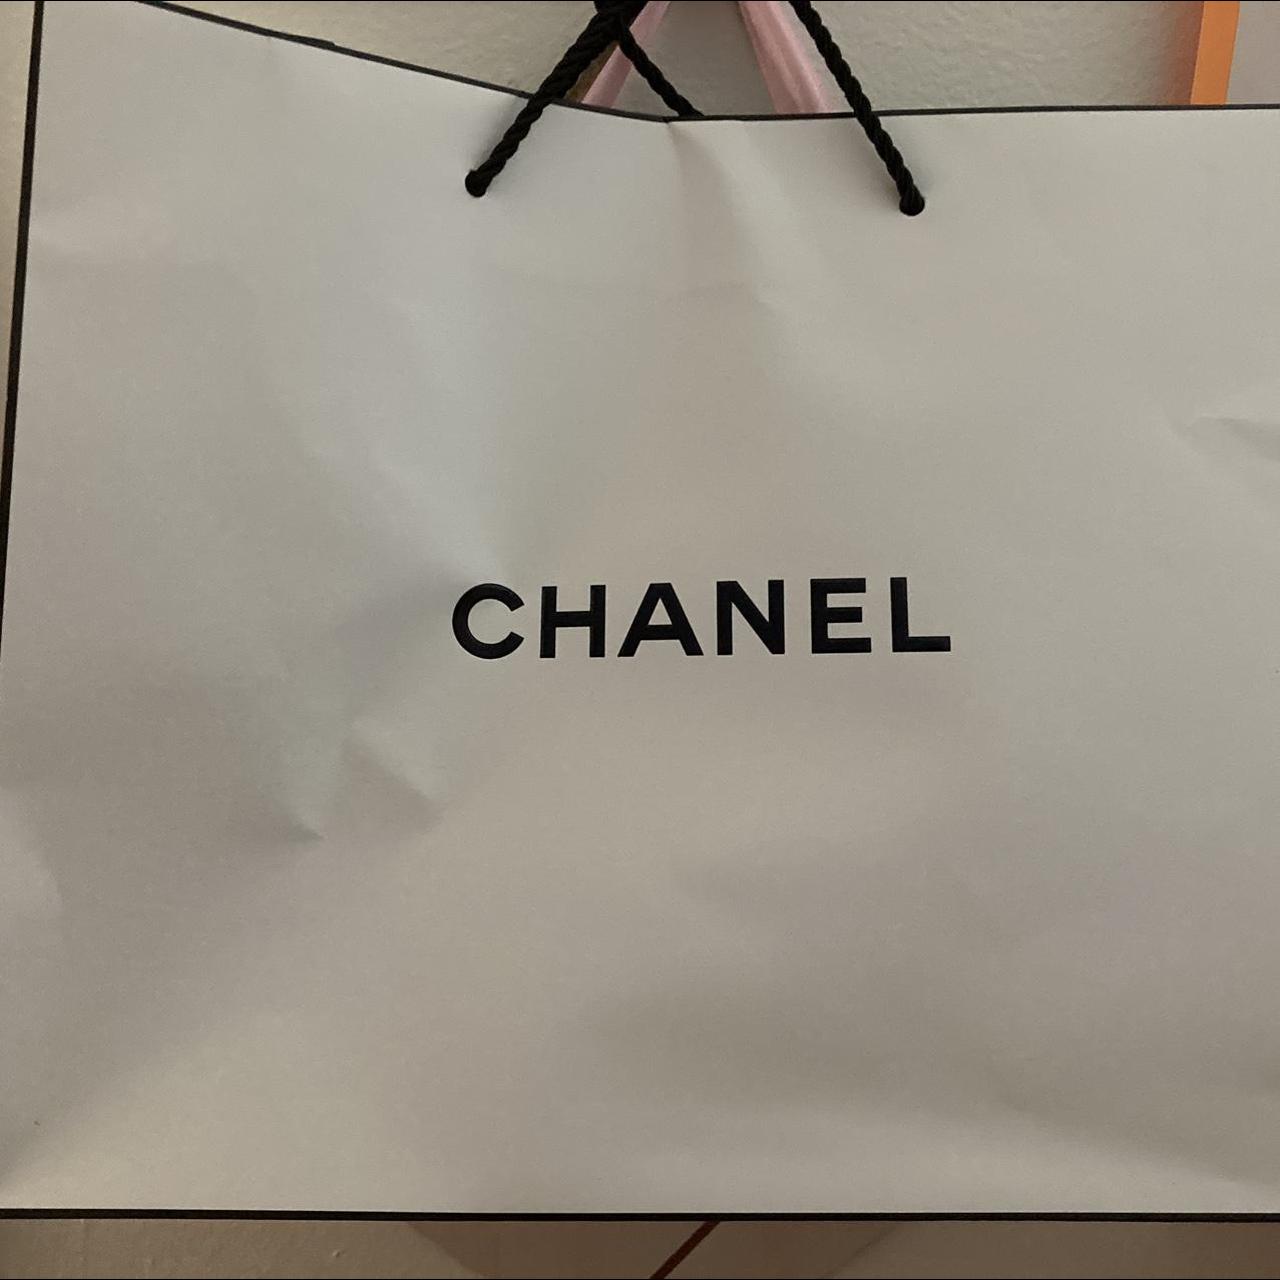 Brand new Chanel paper bag 🥂 The bag is a decent - Depop